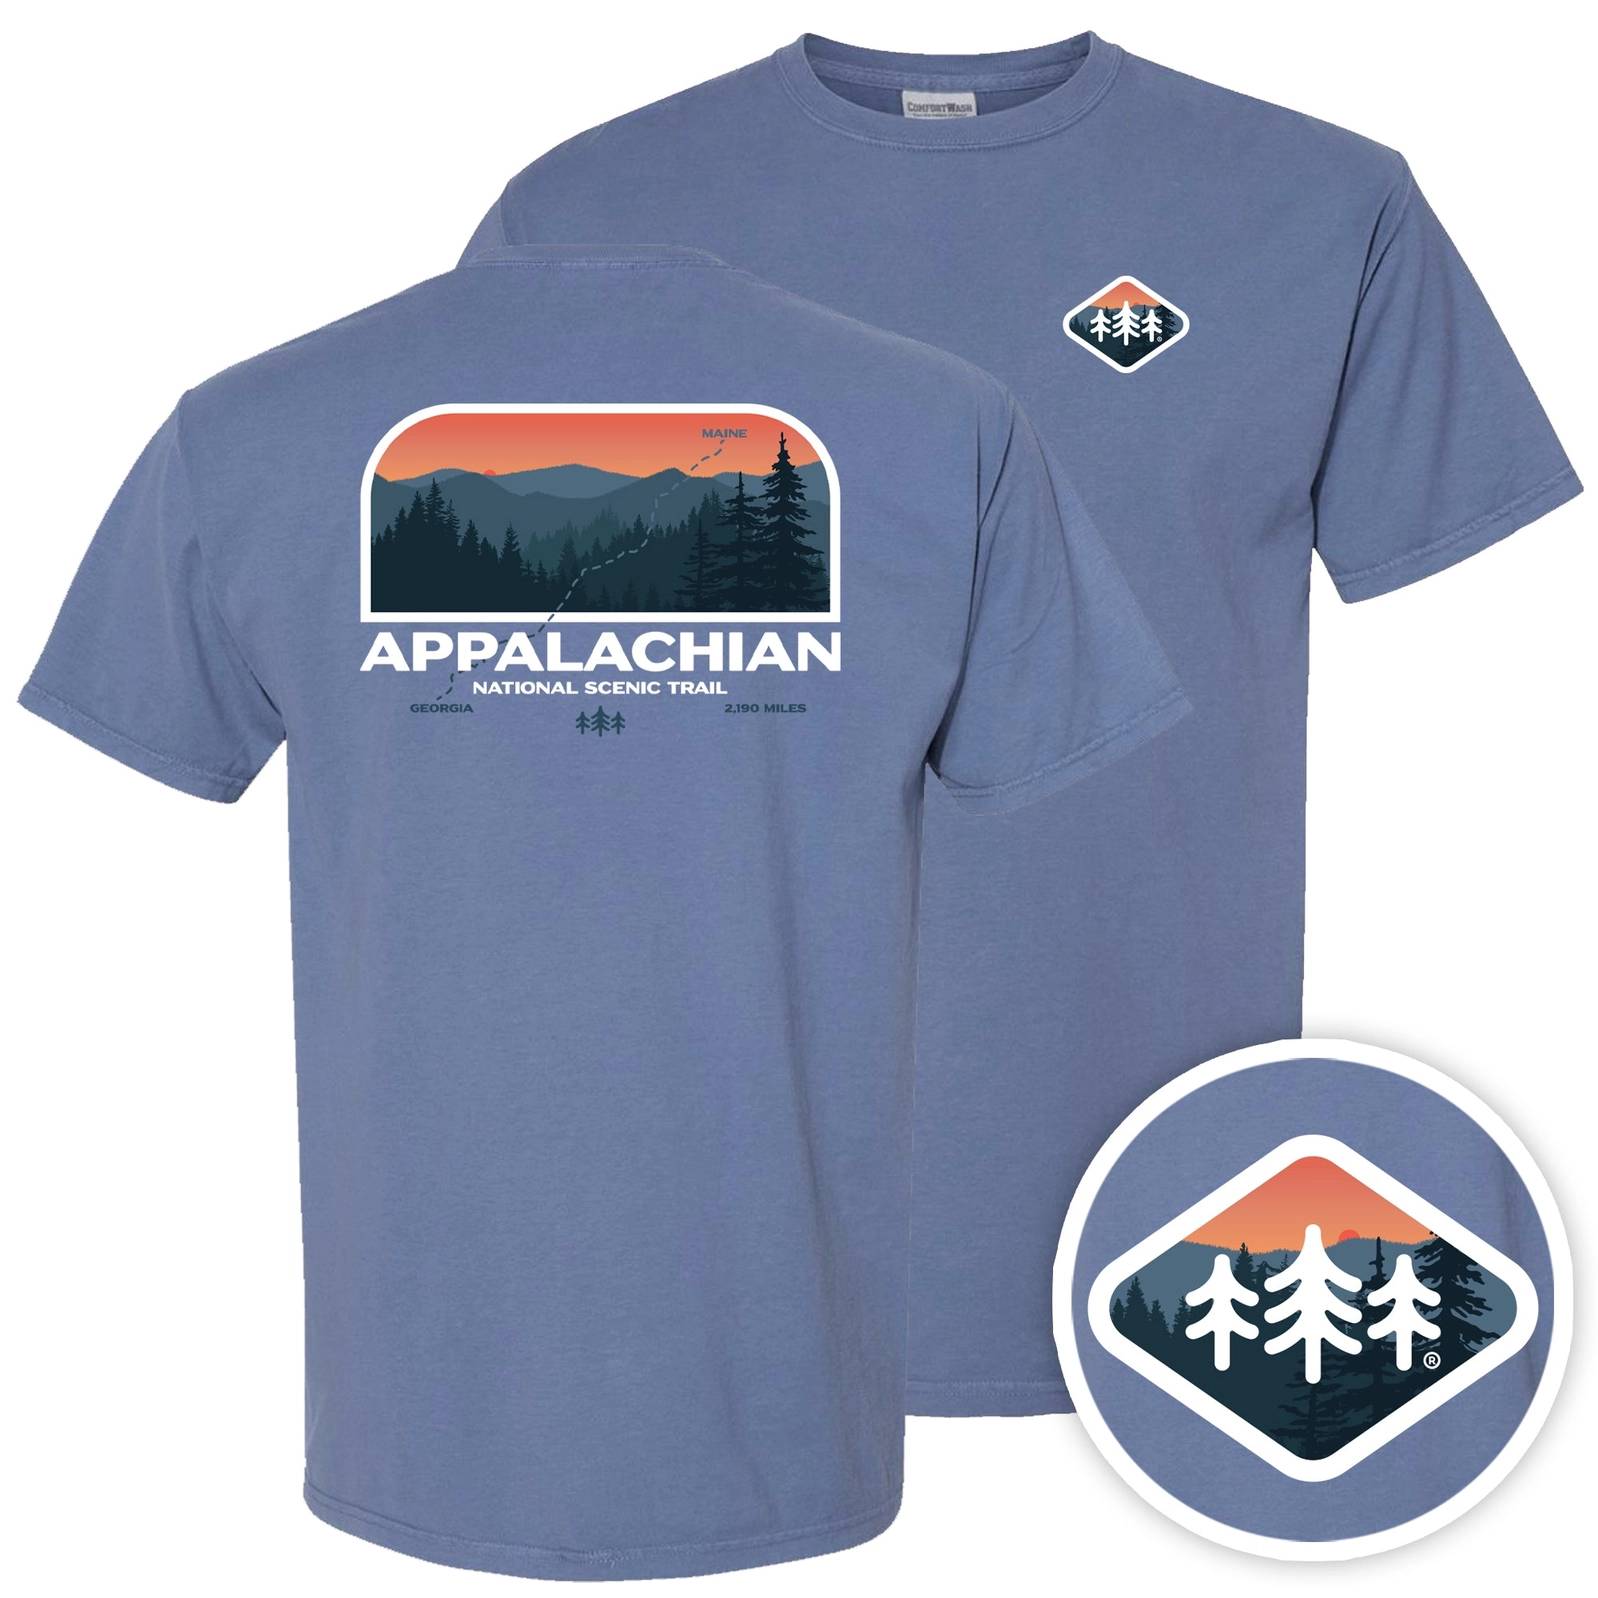 TriPine Appalachian Trail Short Sleeve Shirt